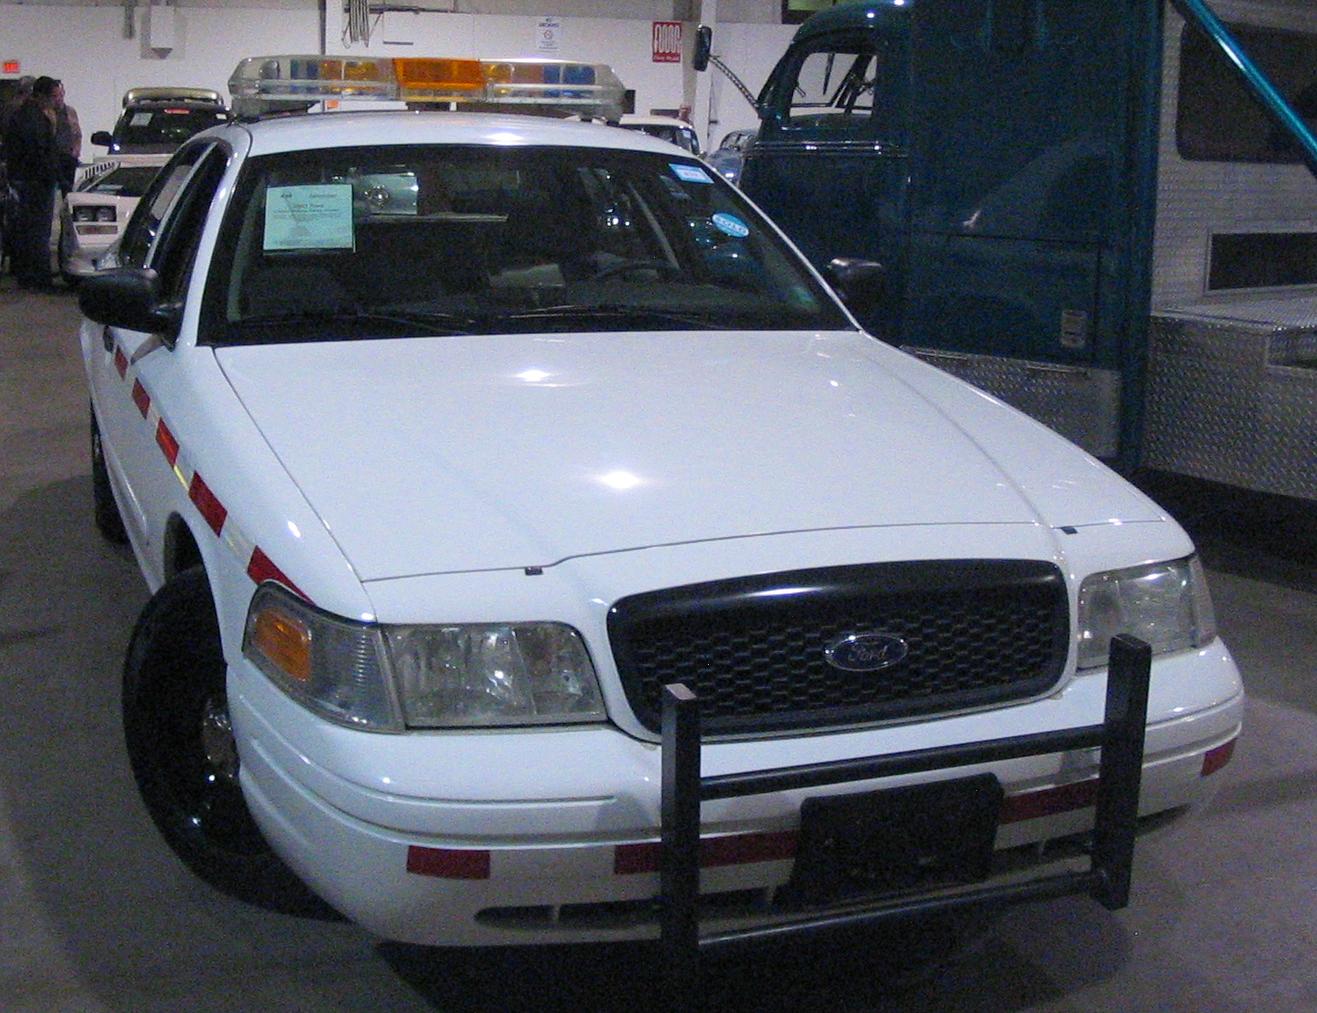 New ford police interceptor wiki